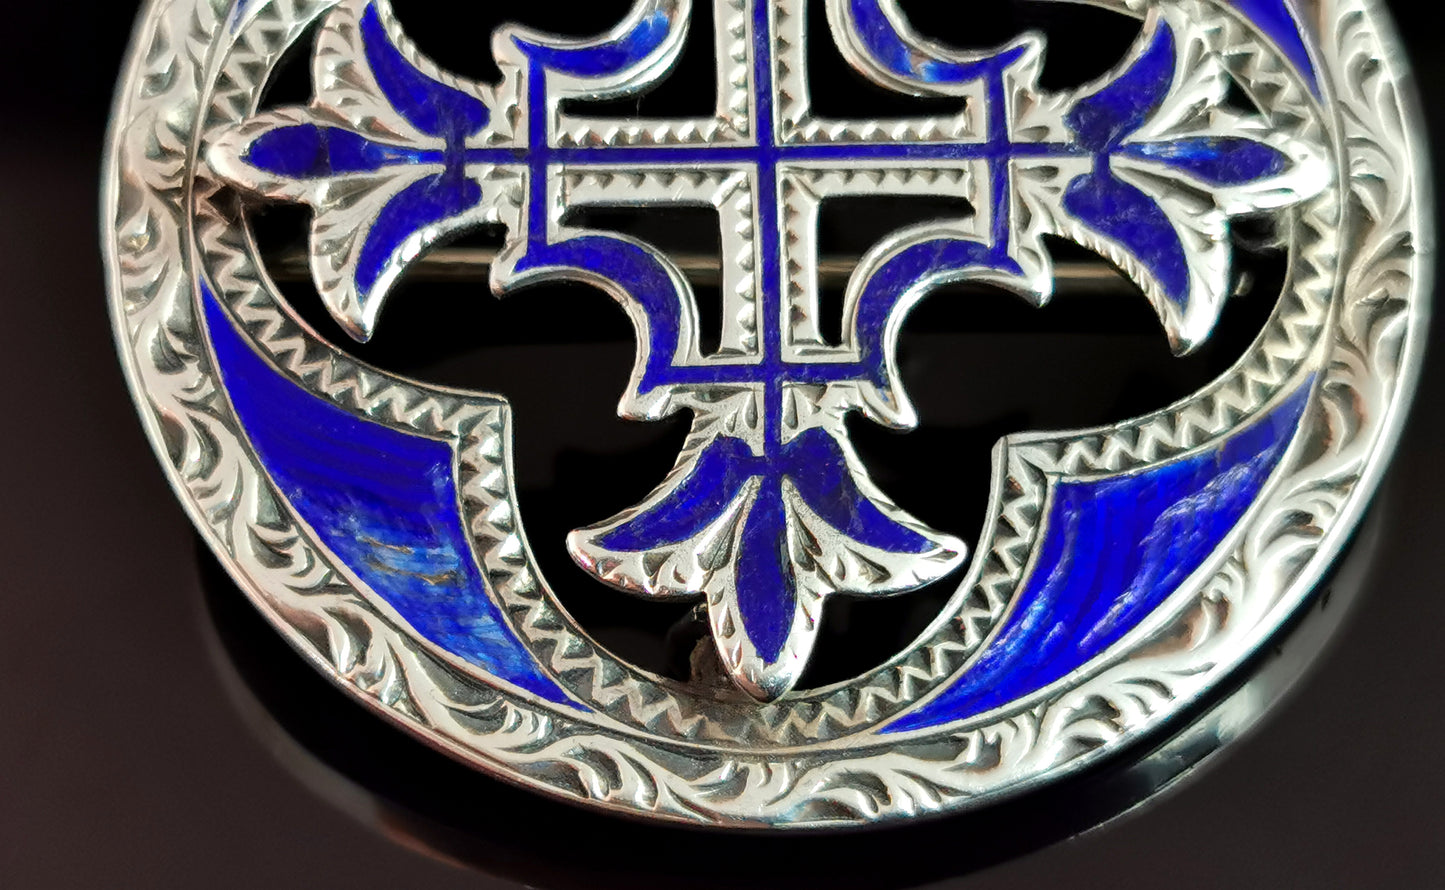 Antique Scottish celtic Cross brooch, sterling silver and blue enamel, Victorian